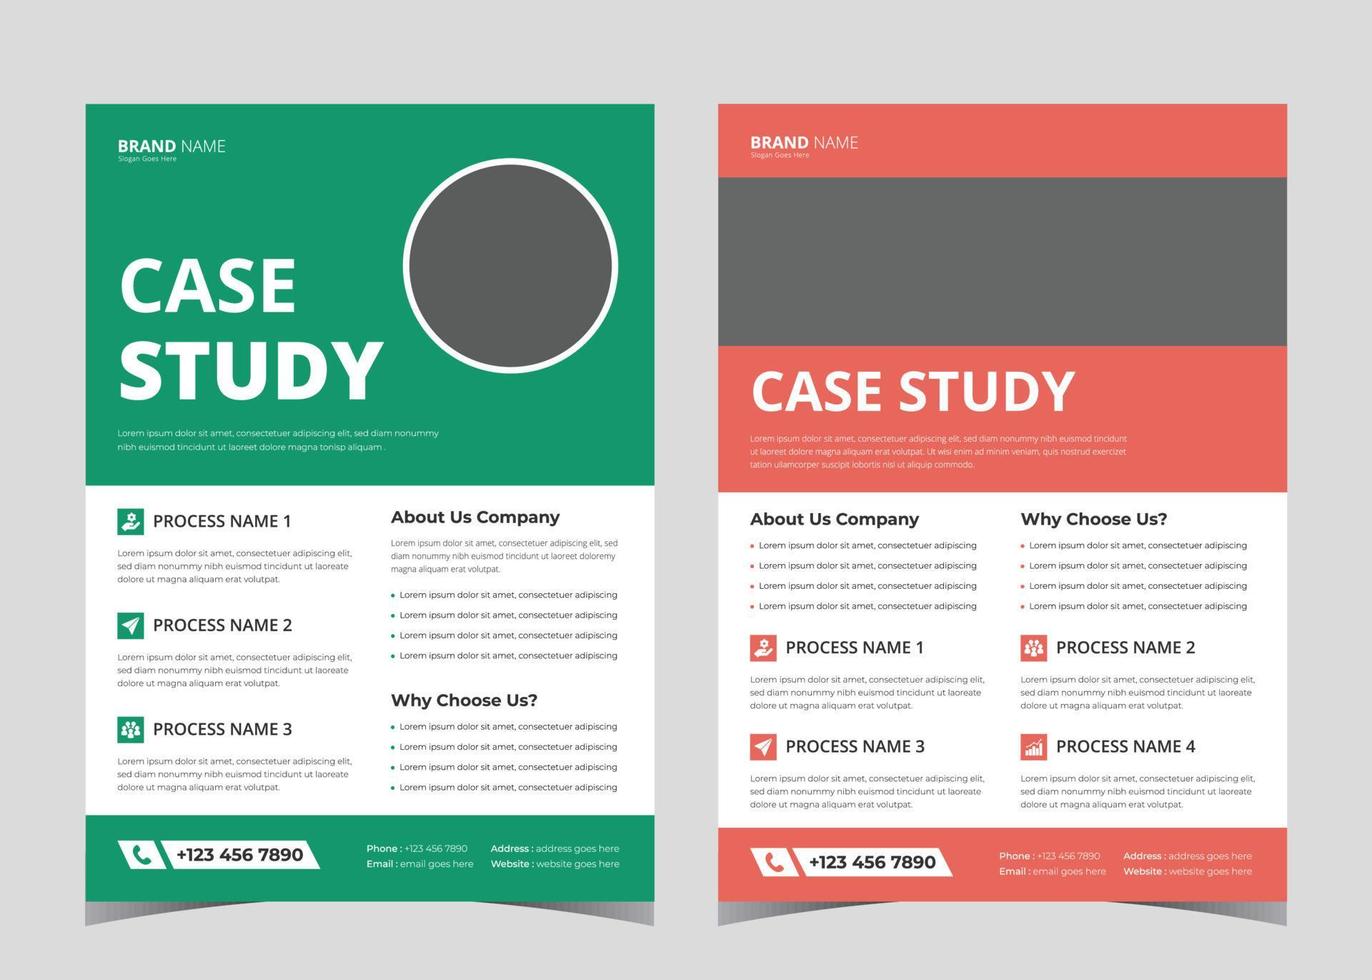 Case Study Flyer Design. Flyer Template design with Case Study. Brochure Cover, Poster design, leaflet, Trend Business Case Study Design, Creative Vector Case Study Design.EPS